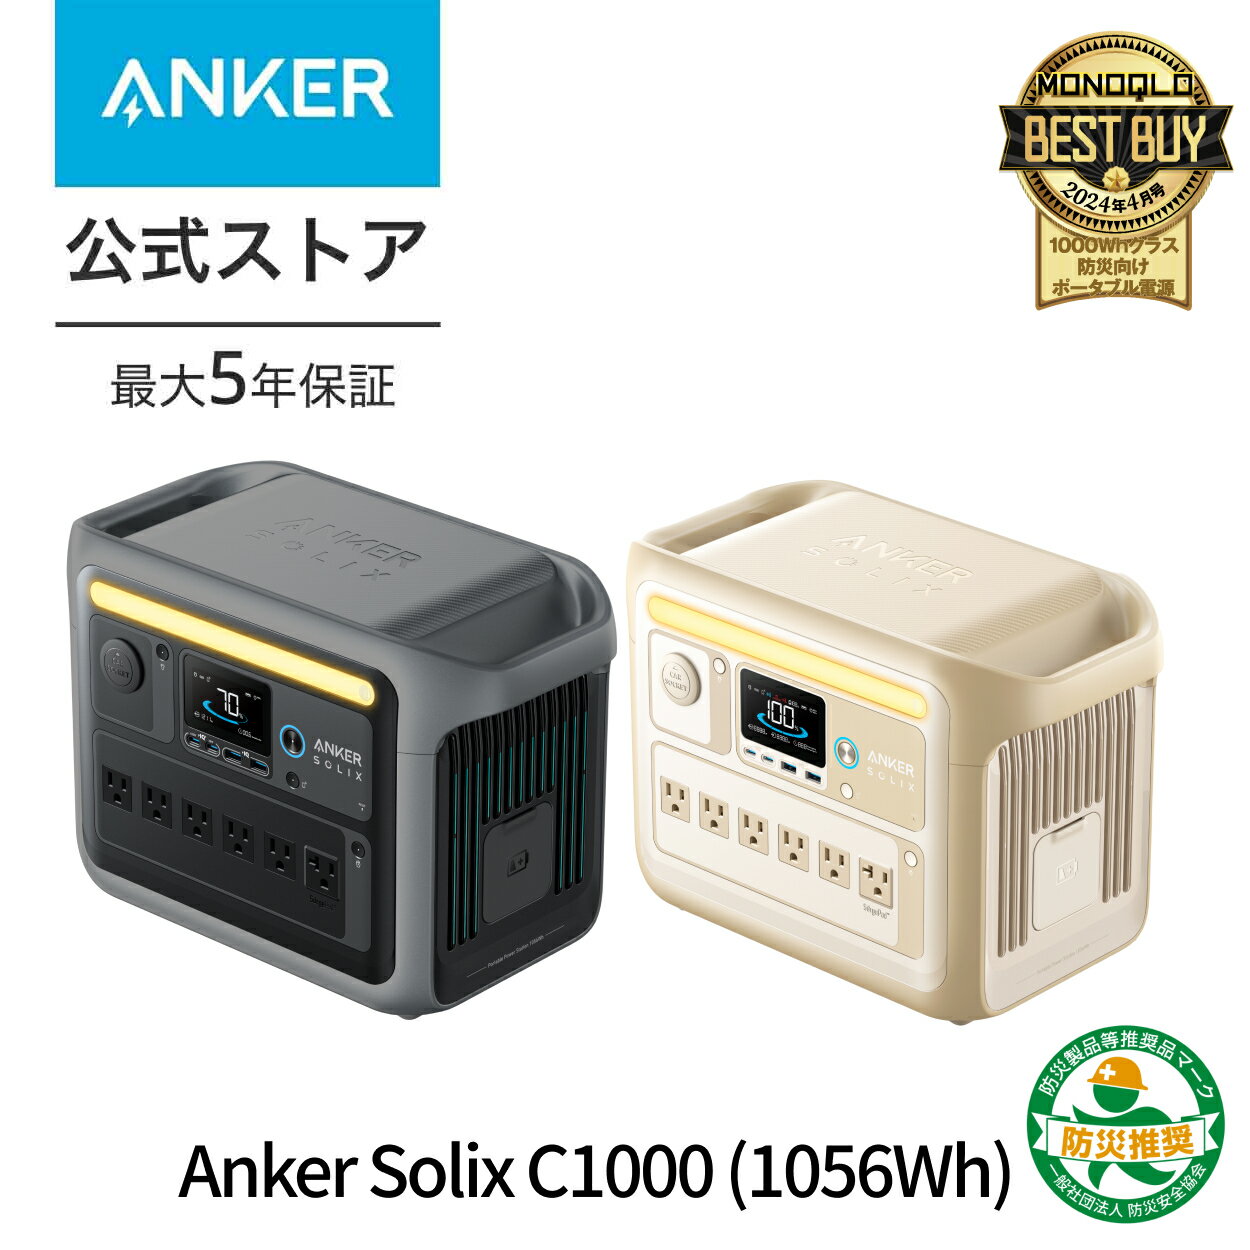 Anker Solix C1000 Portable Power Station 1056Wh 58分満充電 高出力AC(定格1500W/瞬間最大2000W) 長寿命10年 リン酸鉄 コンパクト設計 拡張バッテリー対応(別売り) パススルー機能 アプリ遠隔操作